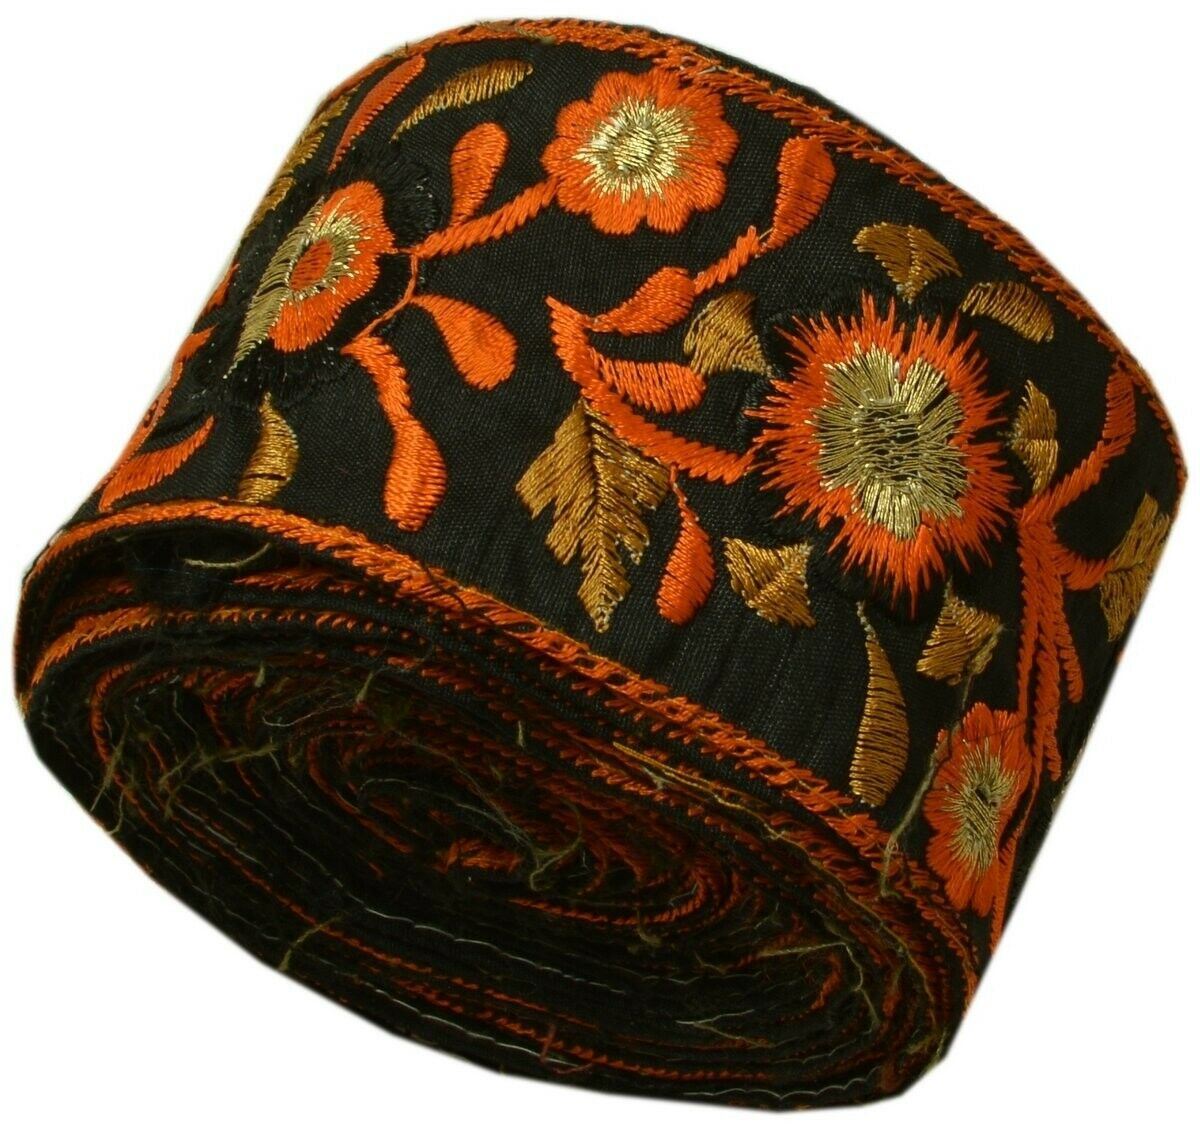 Vintage Sari Border Indian Craft Trim Embroidered Sewing Ribbon Lace Black